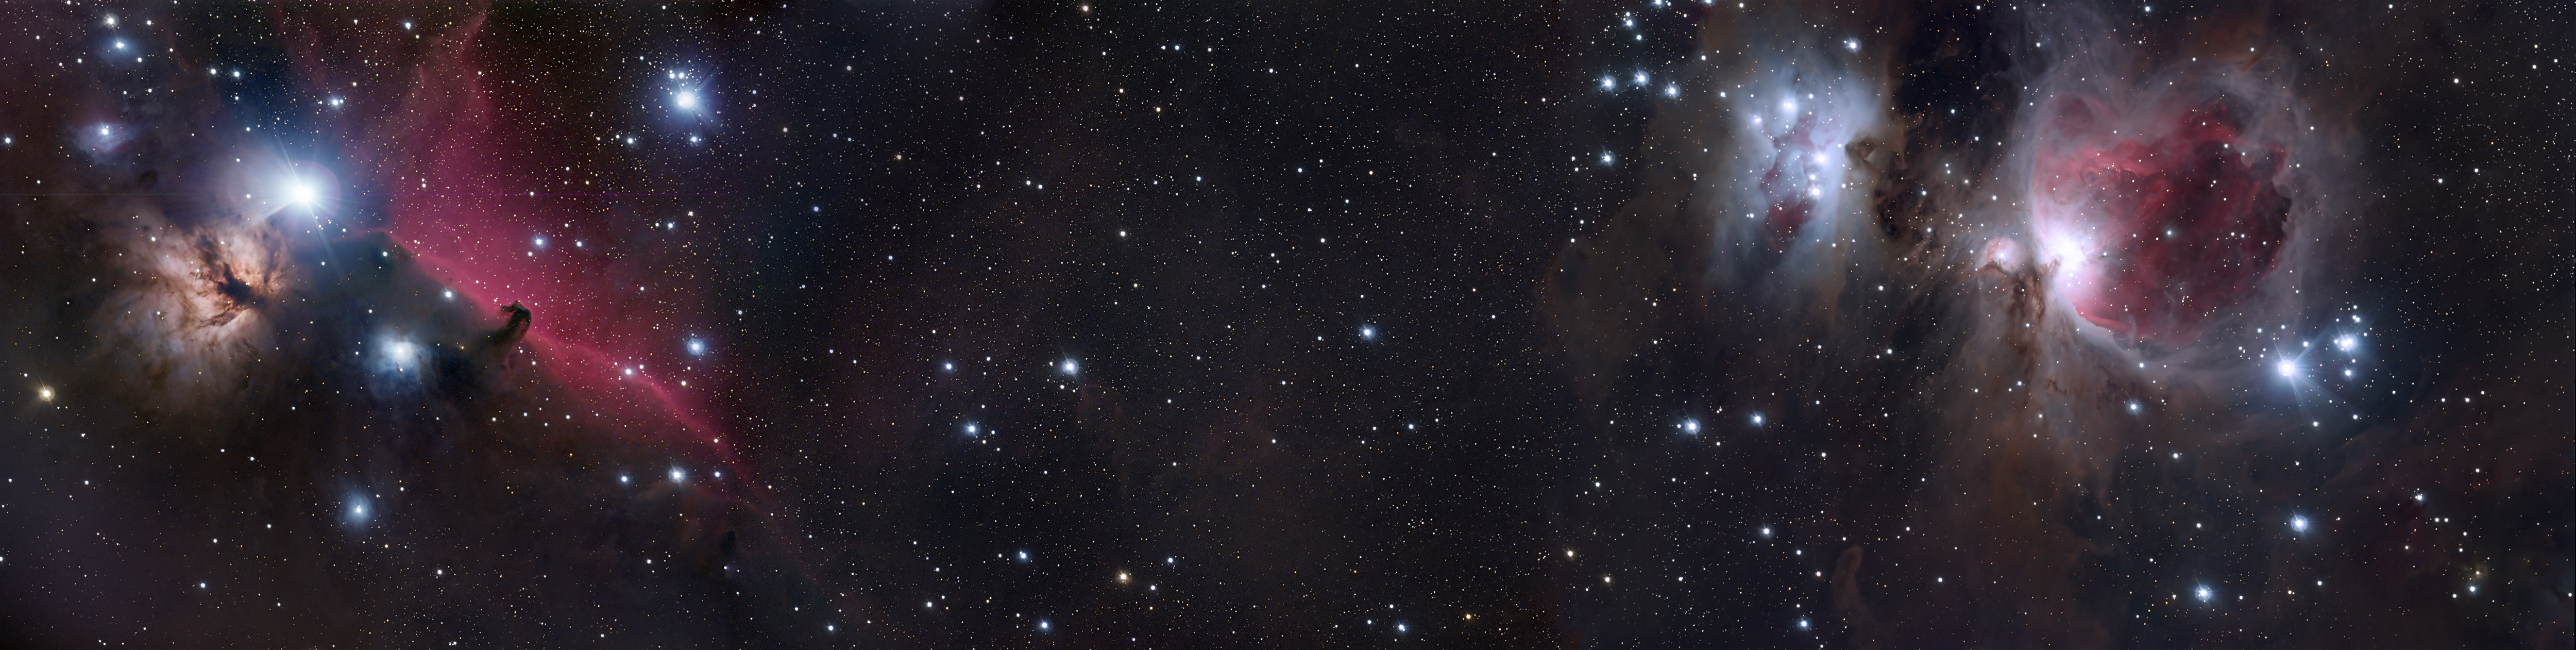 stars, sci fi, nebula, horsehead nebula, orion nebula, space High Definition image